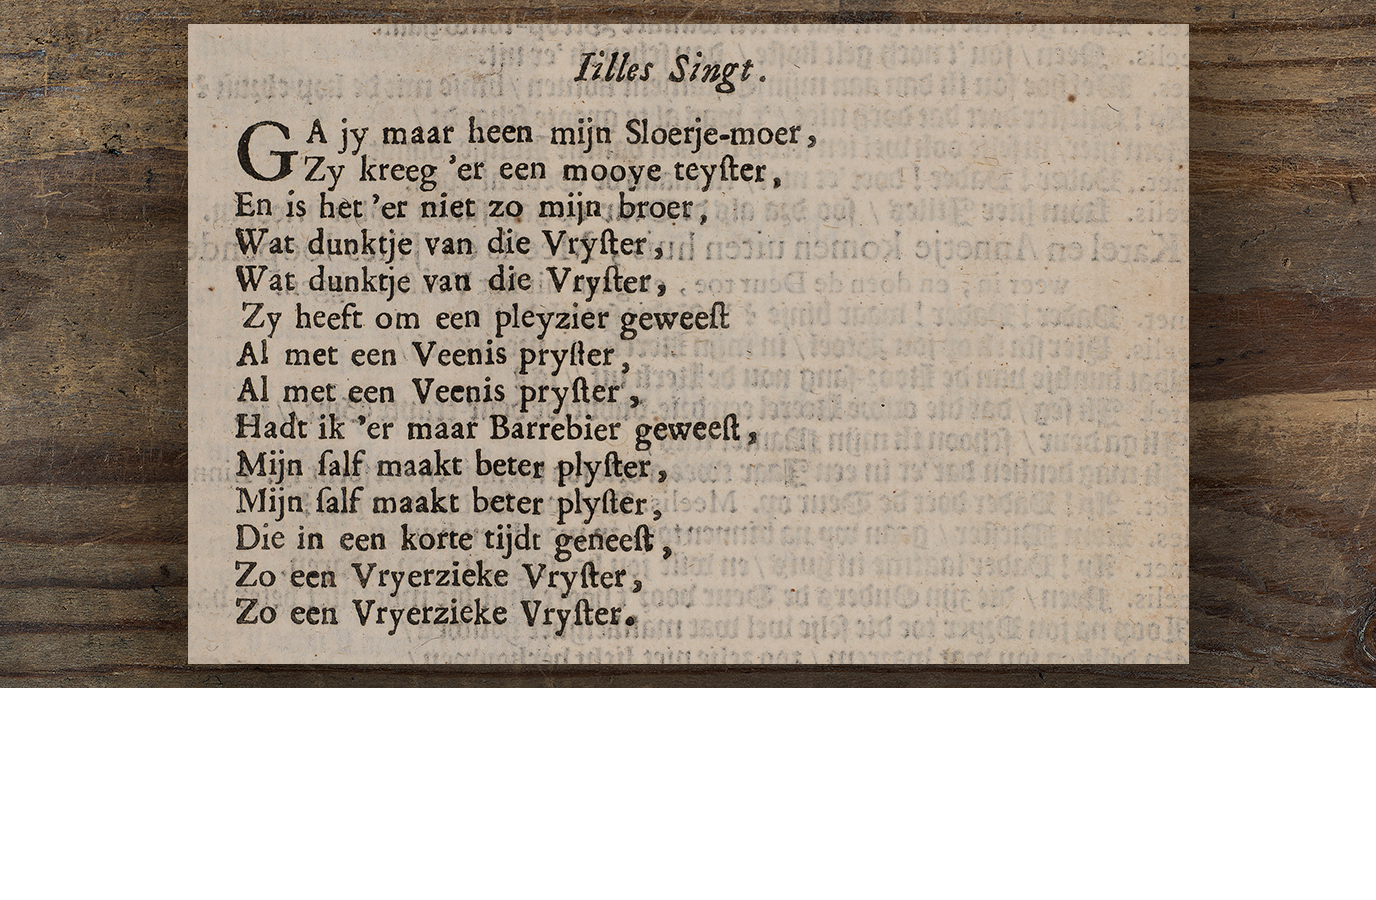 The closing song about the ‘Sloerie-moer’ (‘slattern’) Annetje.